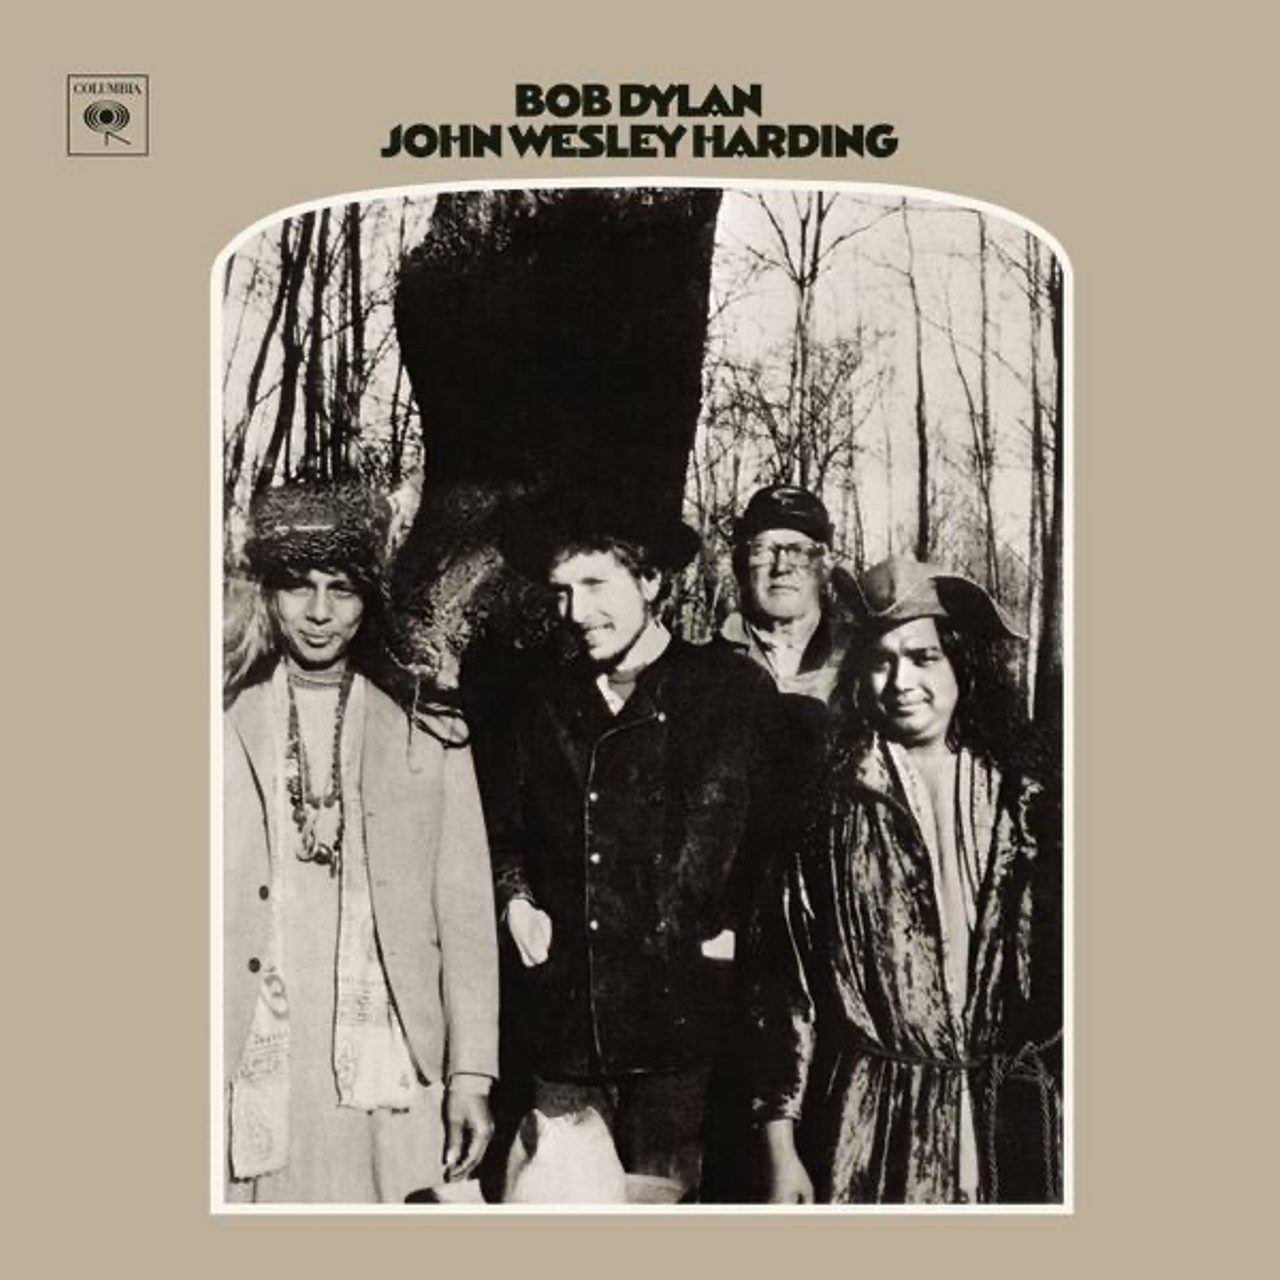 Bob Dylan - John Wesley Harding cover album